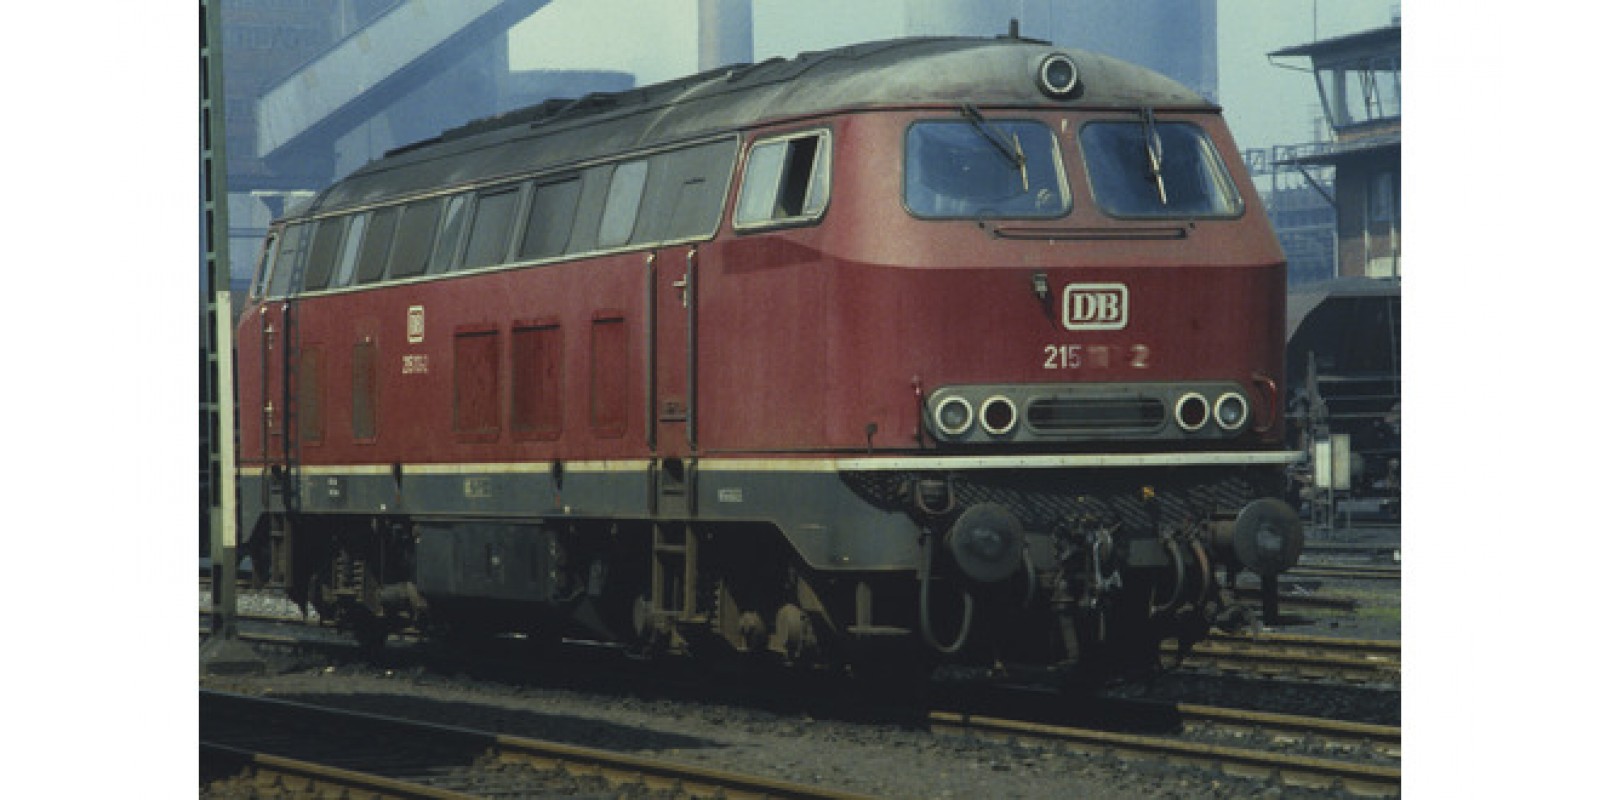 FL394073 - Diesel locomotive class 215, DB